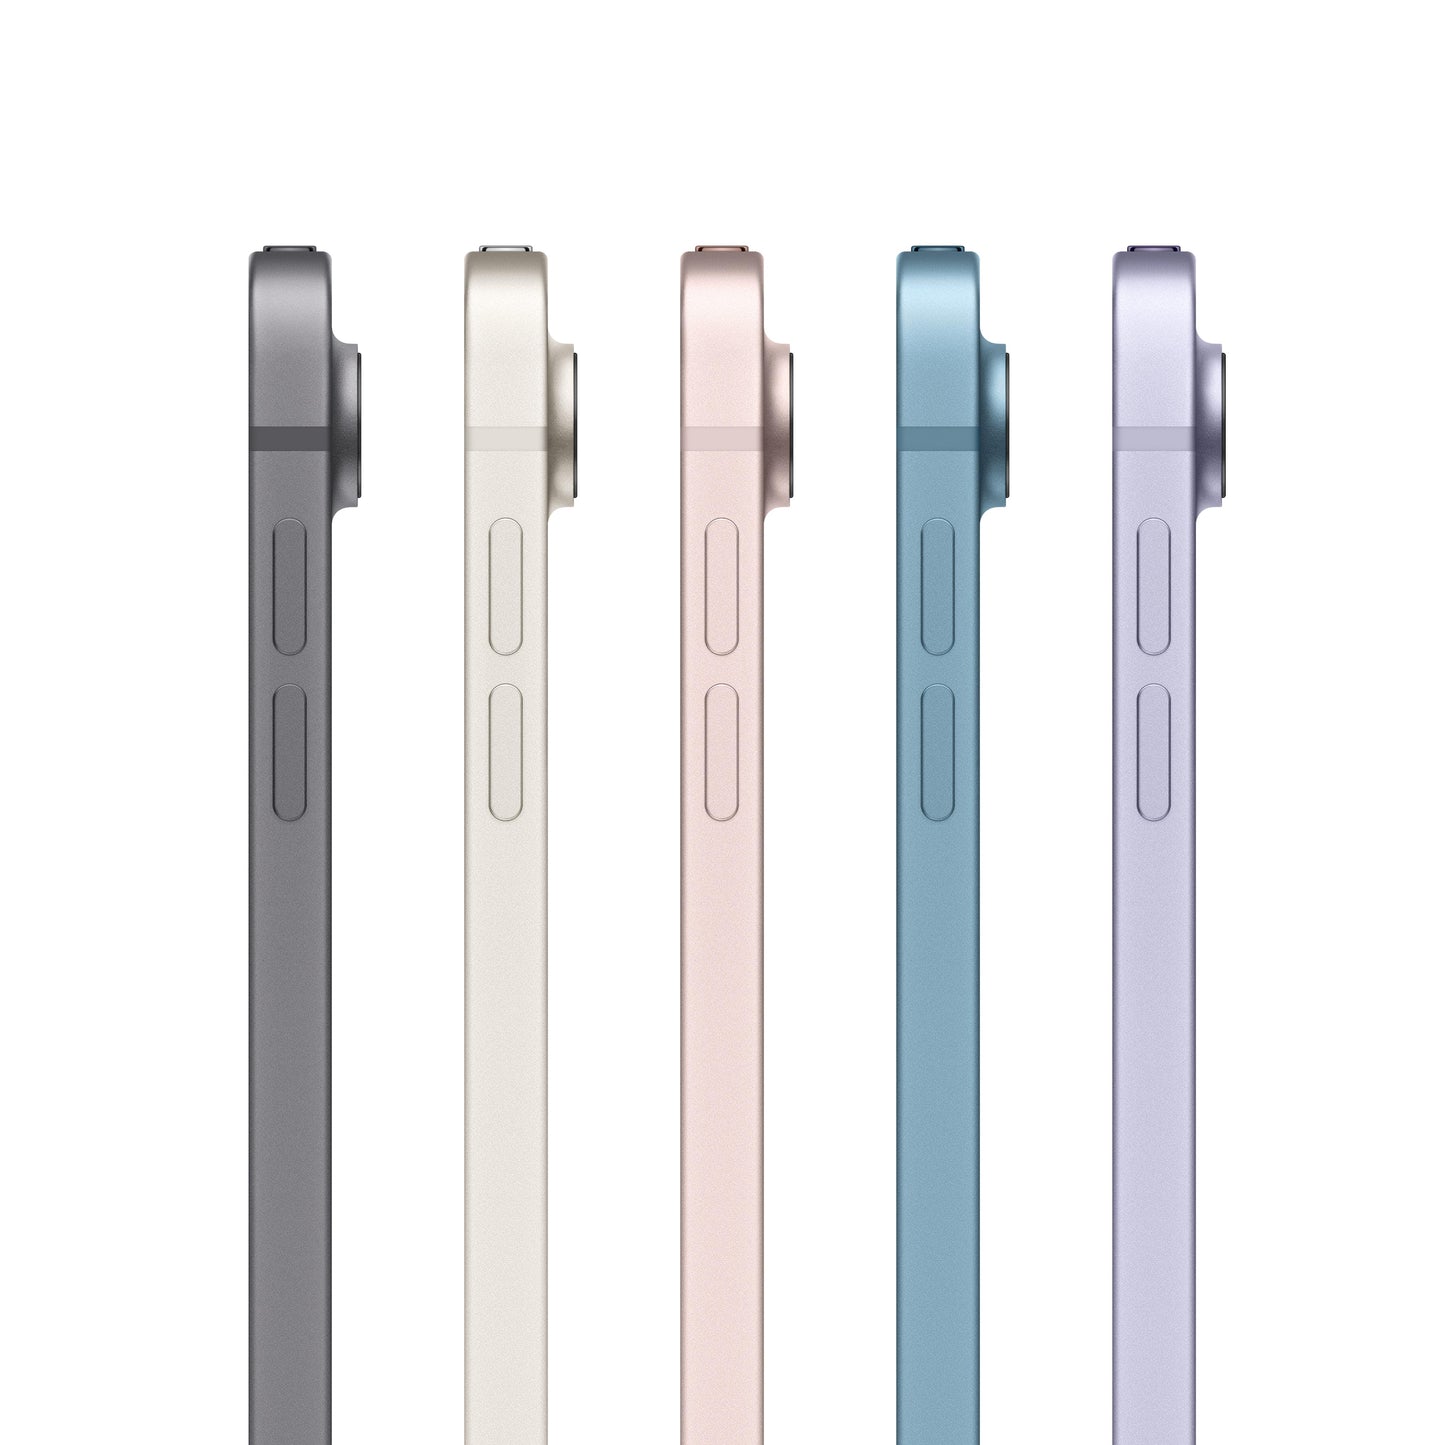 10.9-inch iPad Air Wi-Fi + Cellular 64GB - Pink